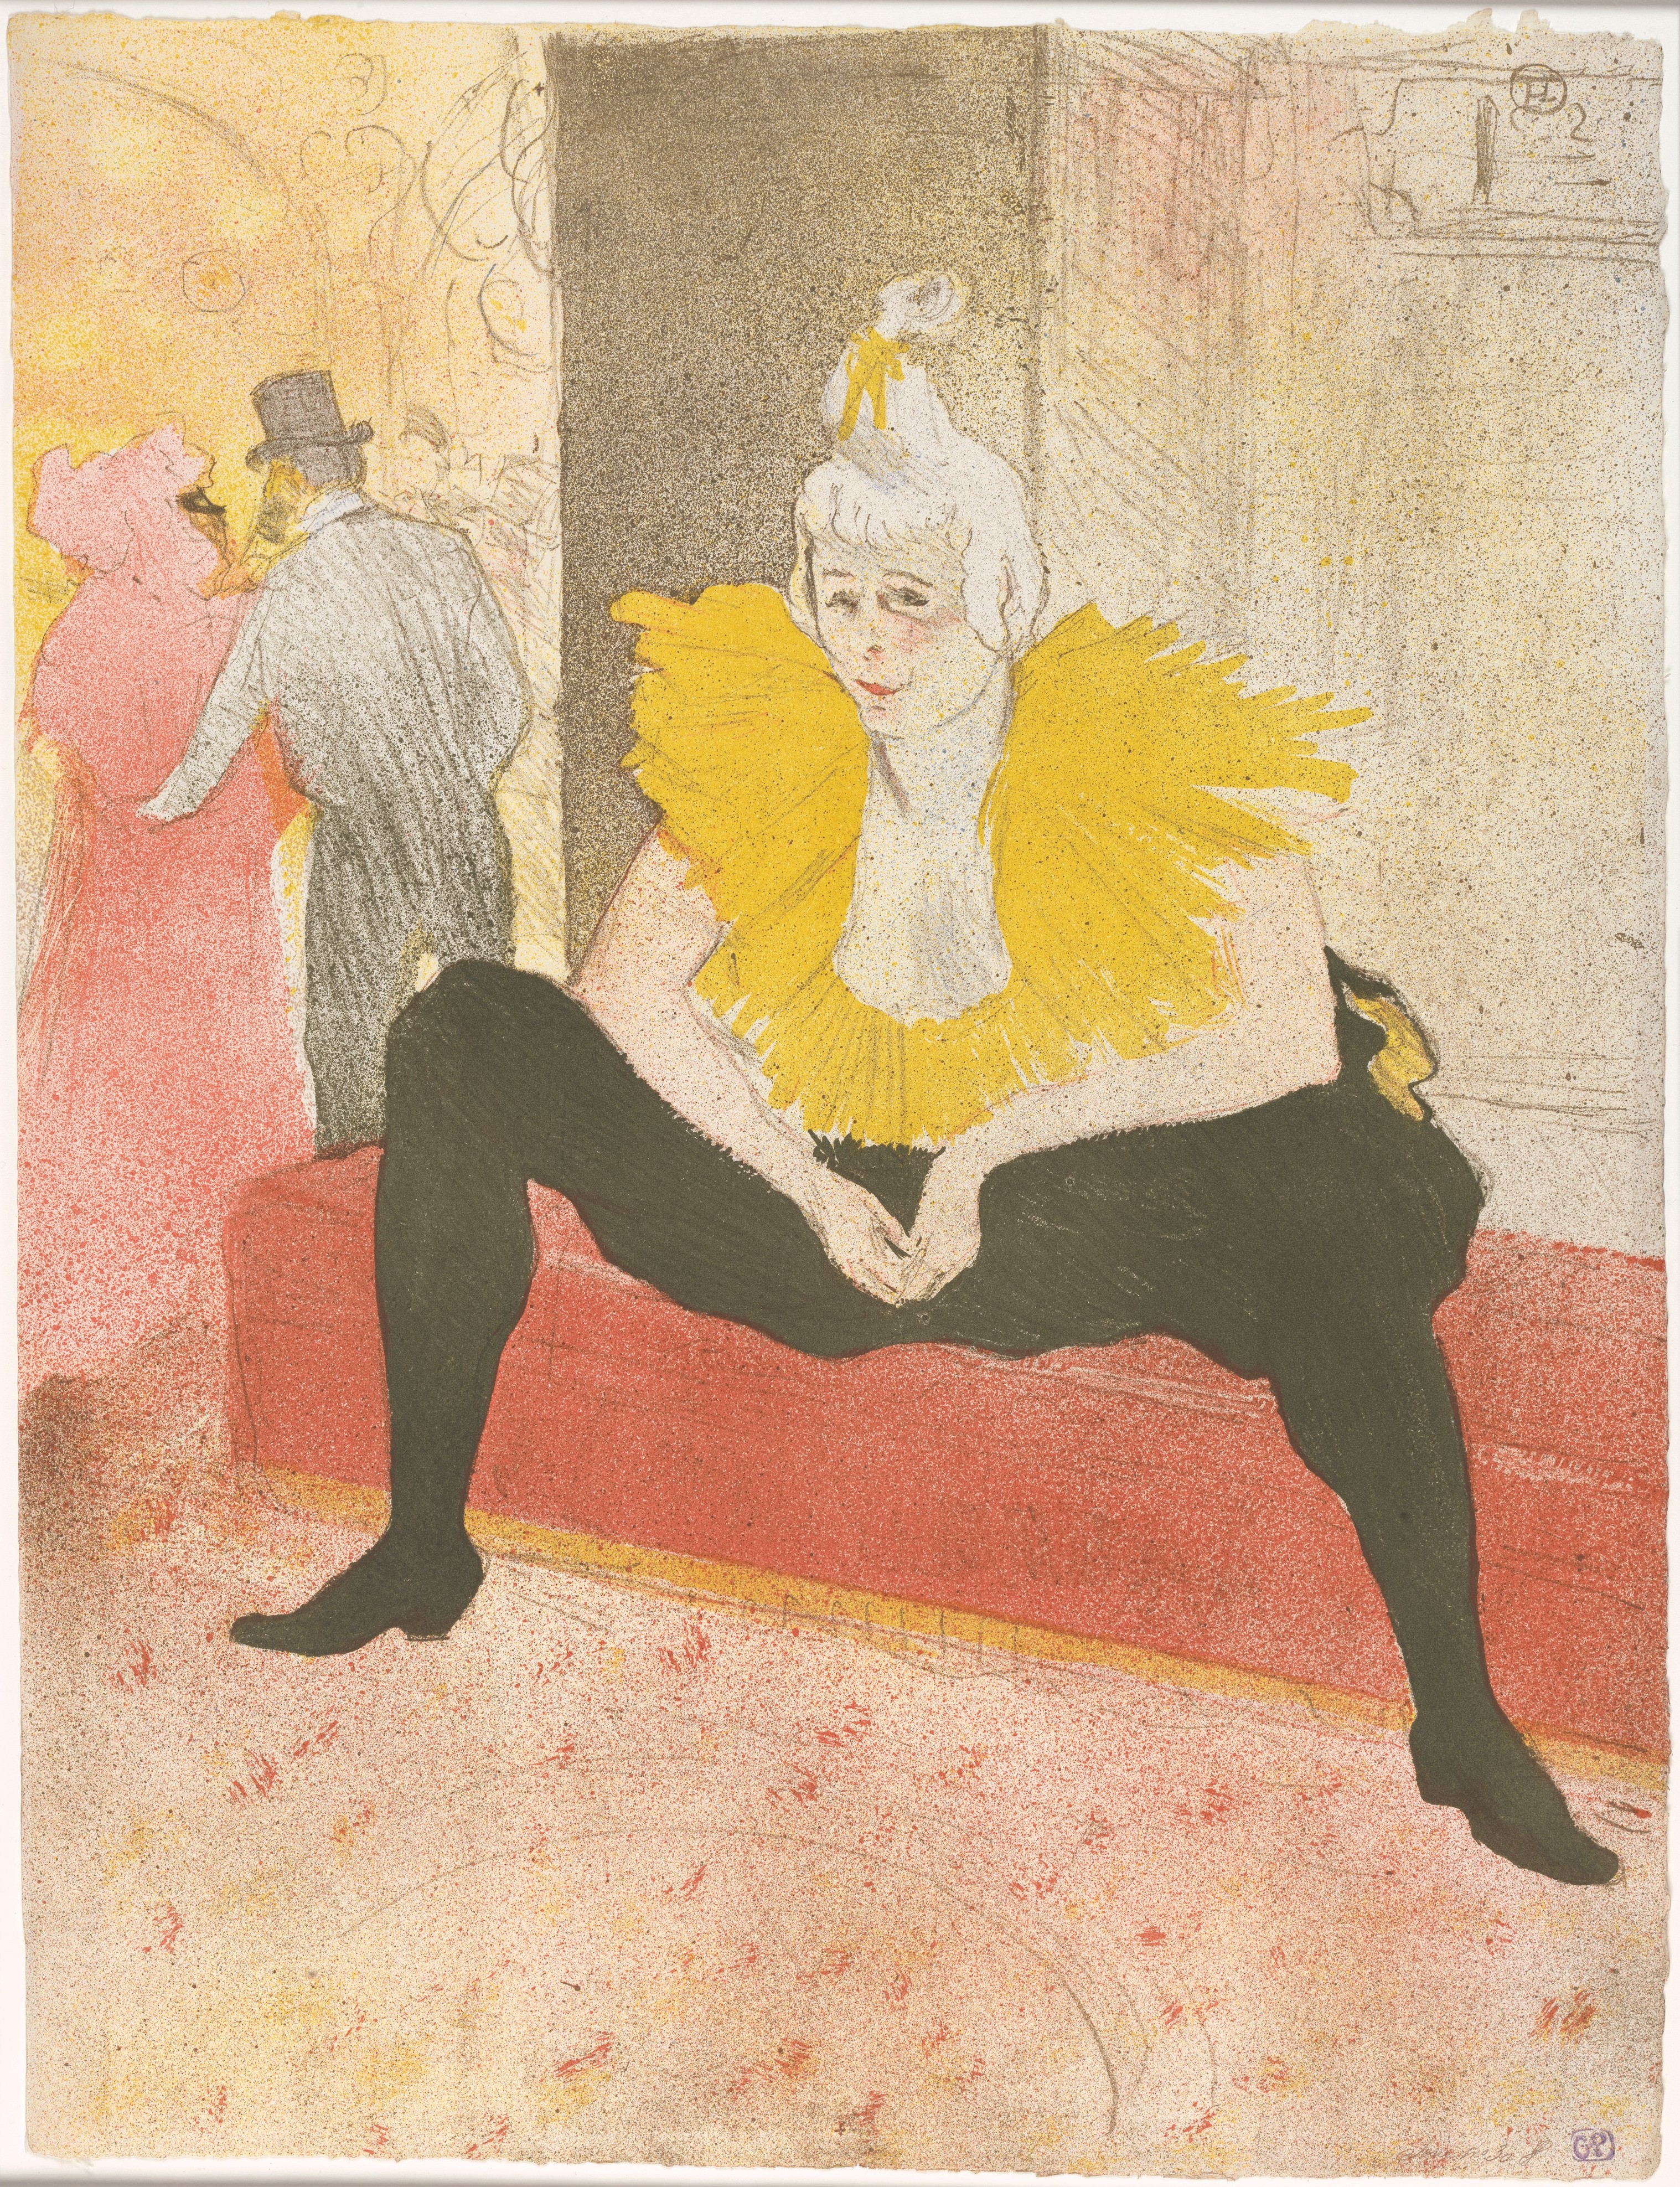 La donna pagliaccio seduta - Mademoiselle Cha-u-ka-o by Henri de Toulouse-Lautrec - 1896 